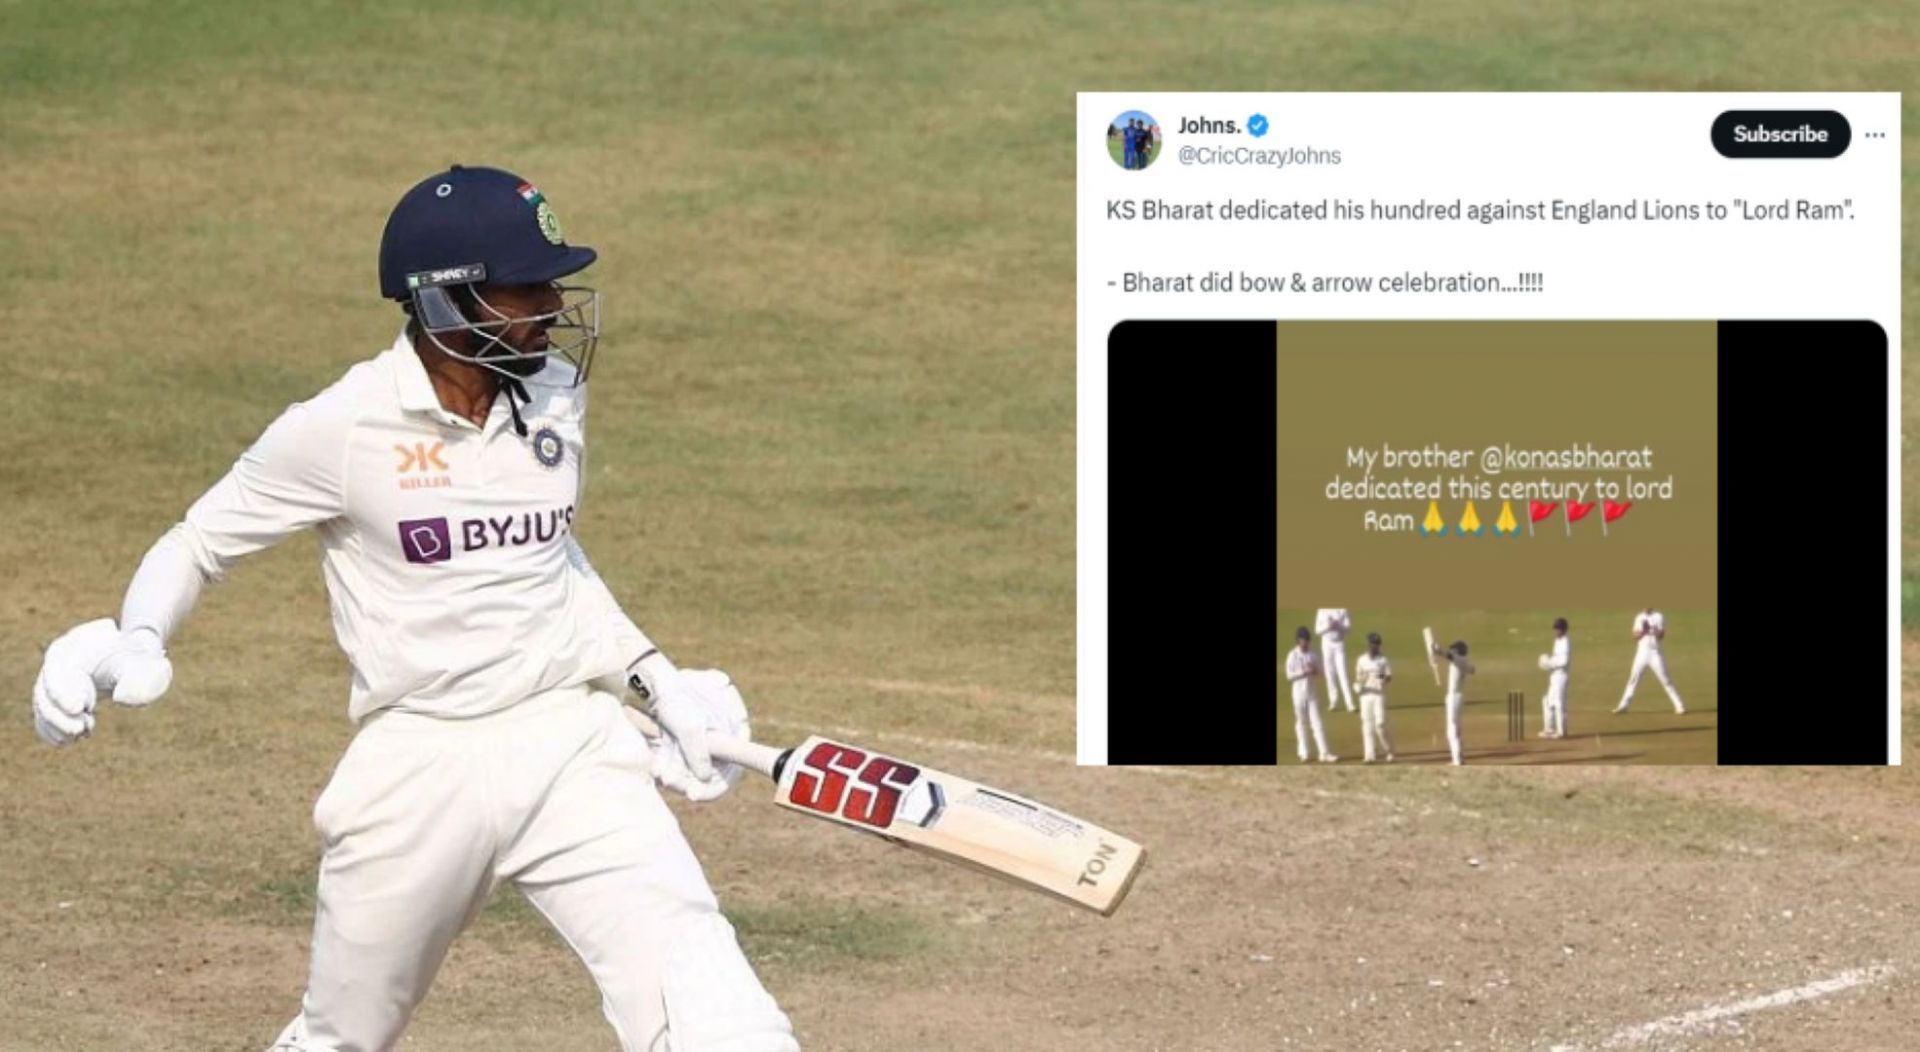 Bharat scored a match-saving unbeaten century to rejuvenate his Test hopes